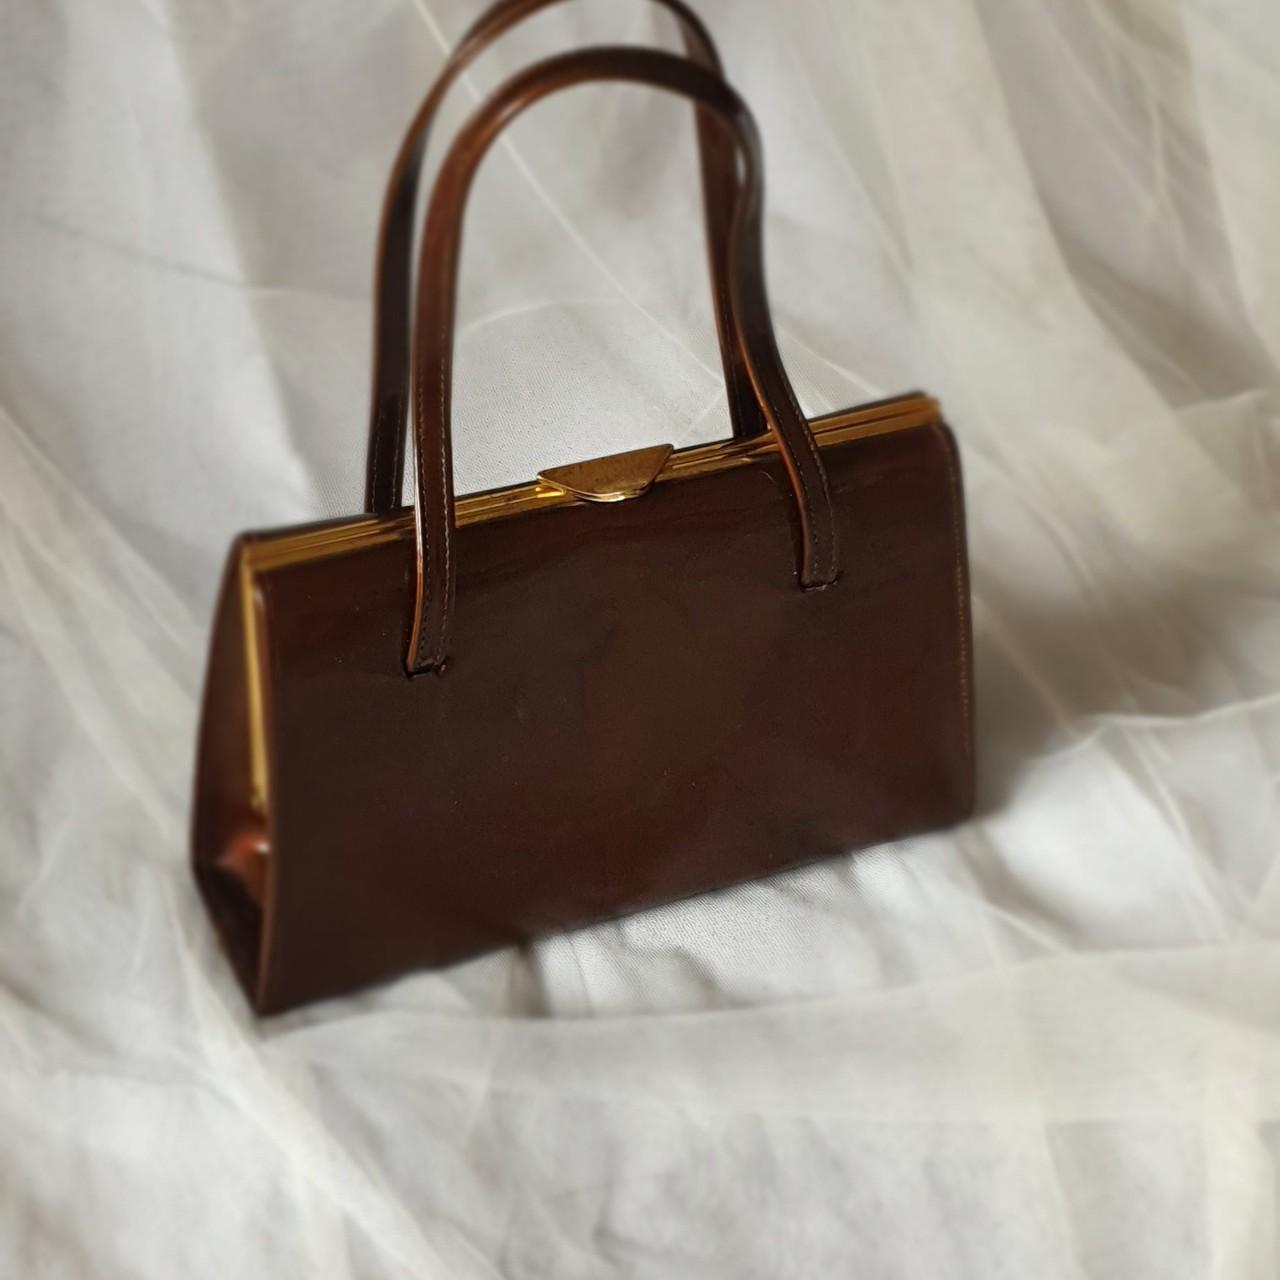 Elbief England Vintage Gilt Frame Handbag Bag